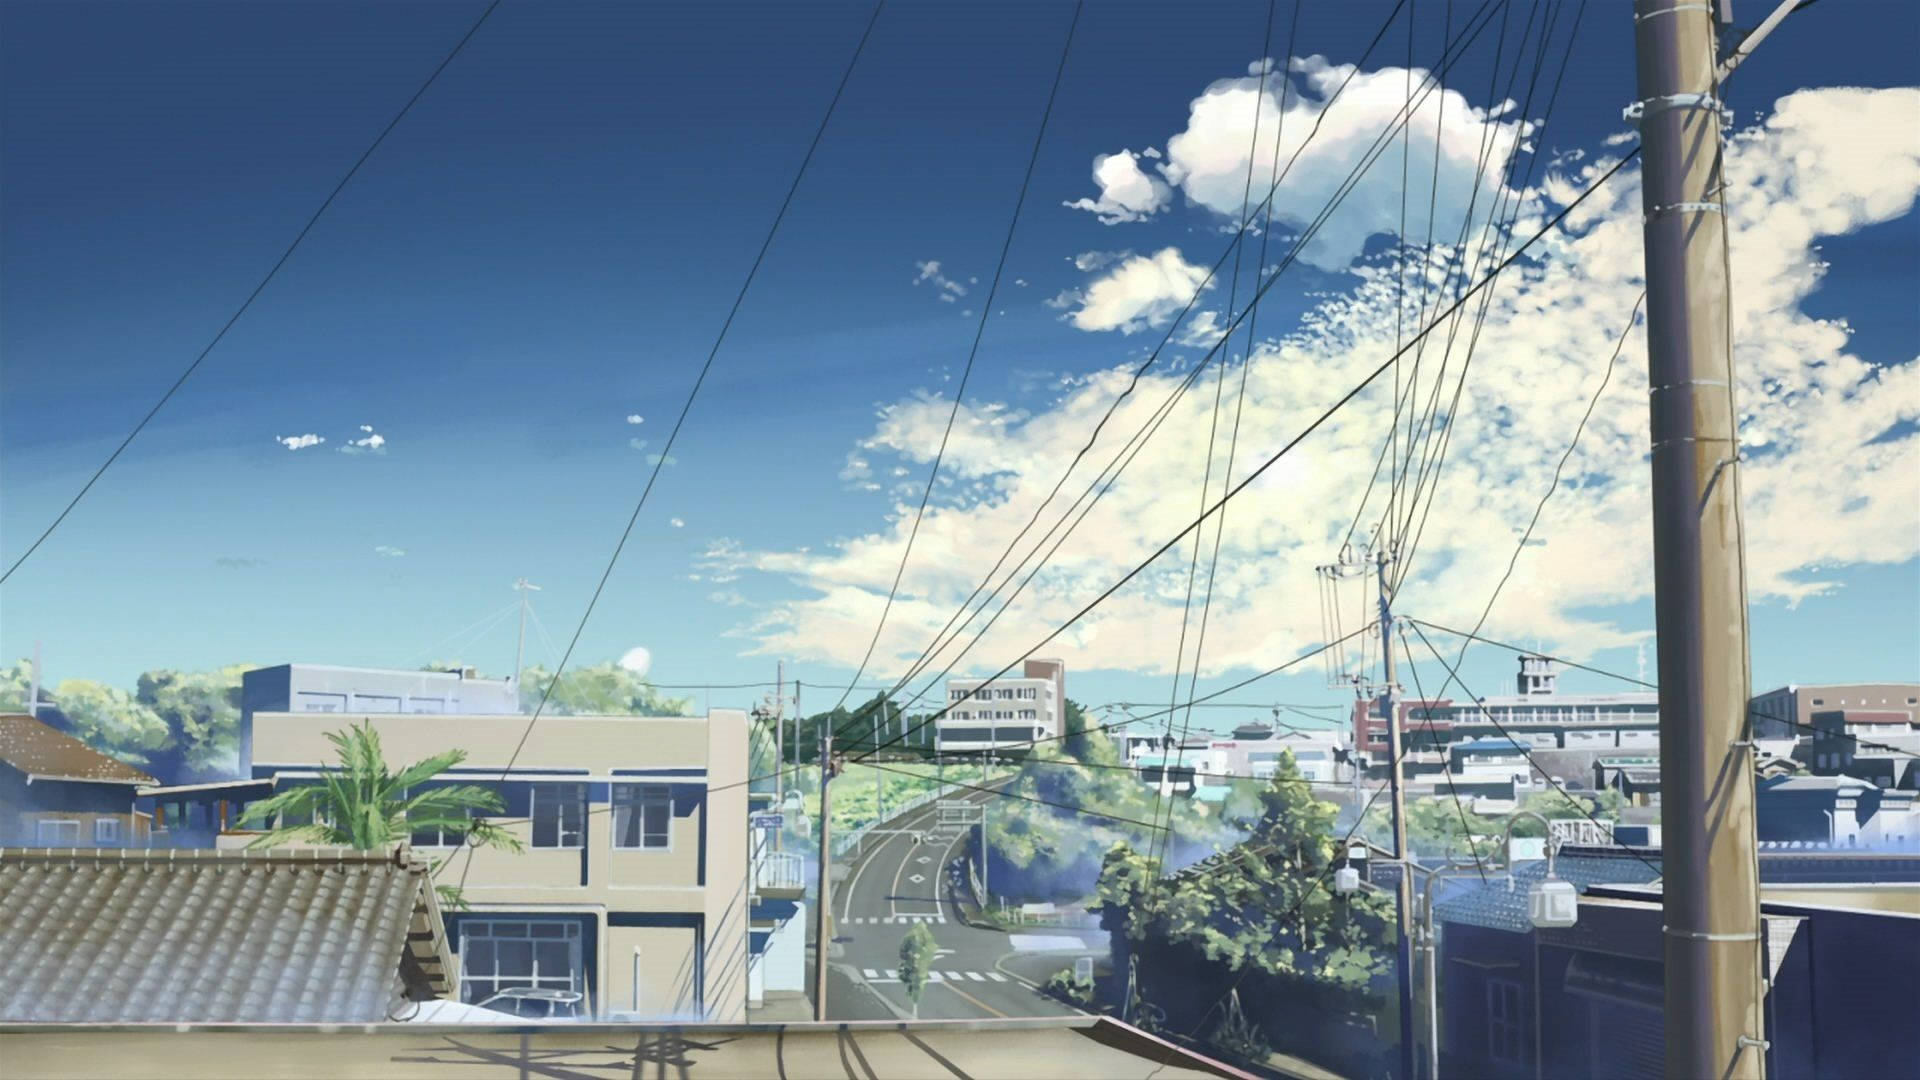 Blue Anime Street Electric Post Aesthetic Wallpaper